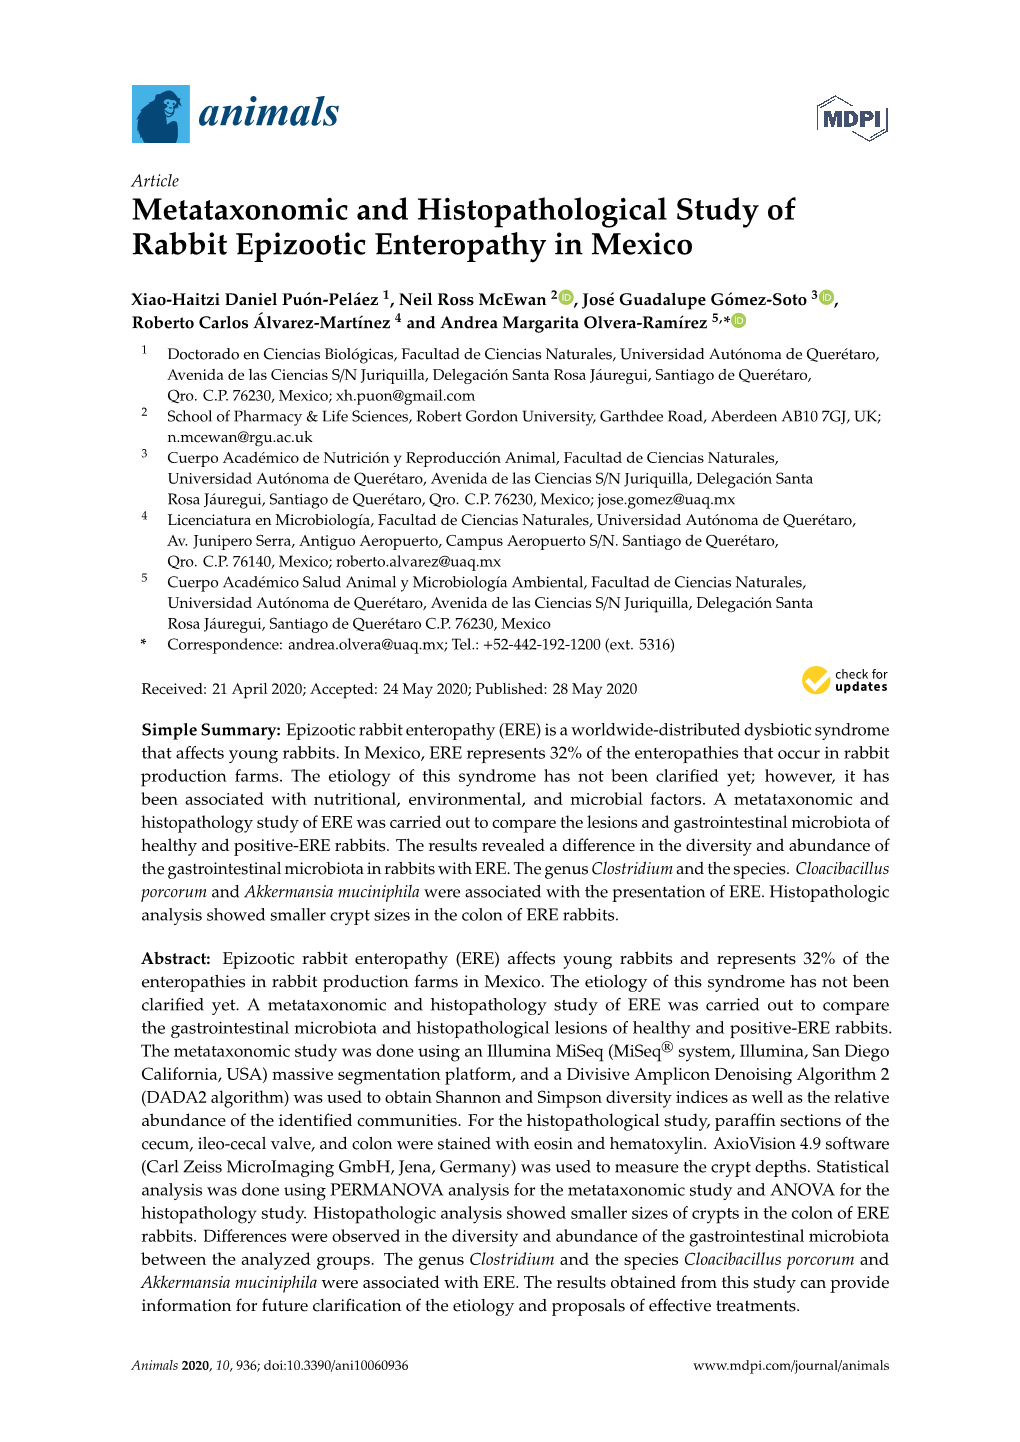 Metataxonomic and Histopathological Study of Rabbit Epizootic Enteropathy in Mexico